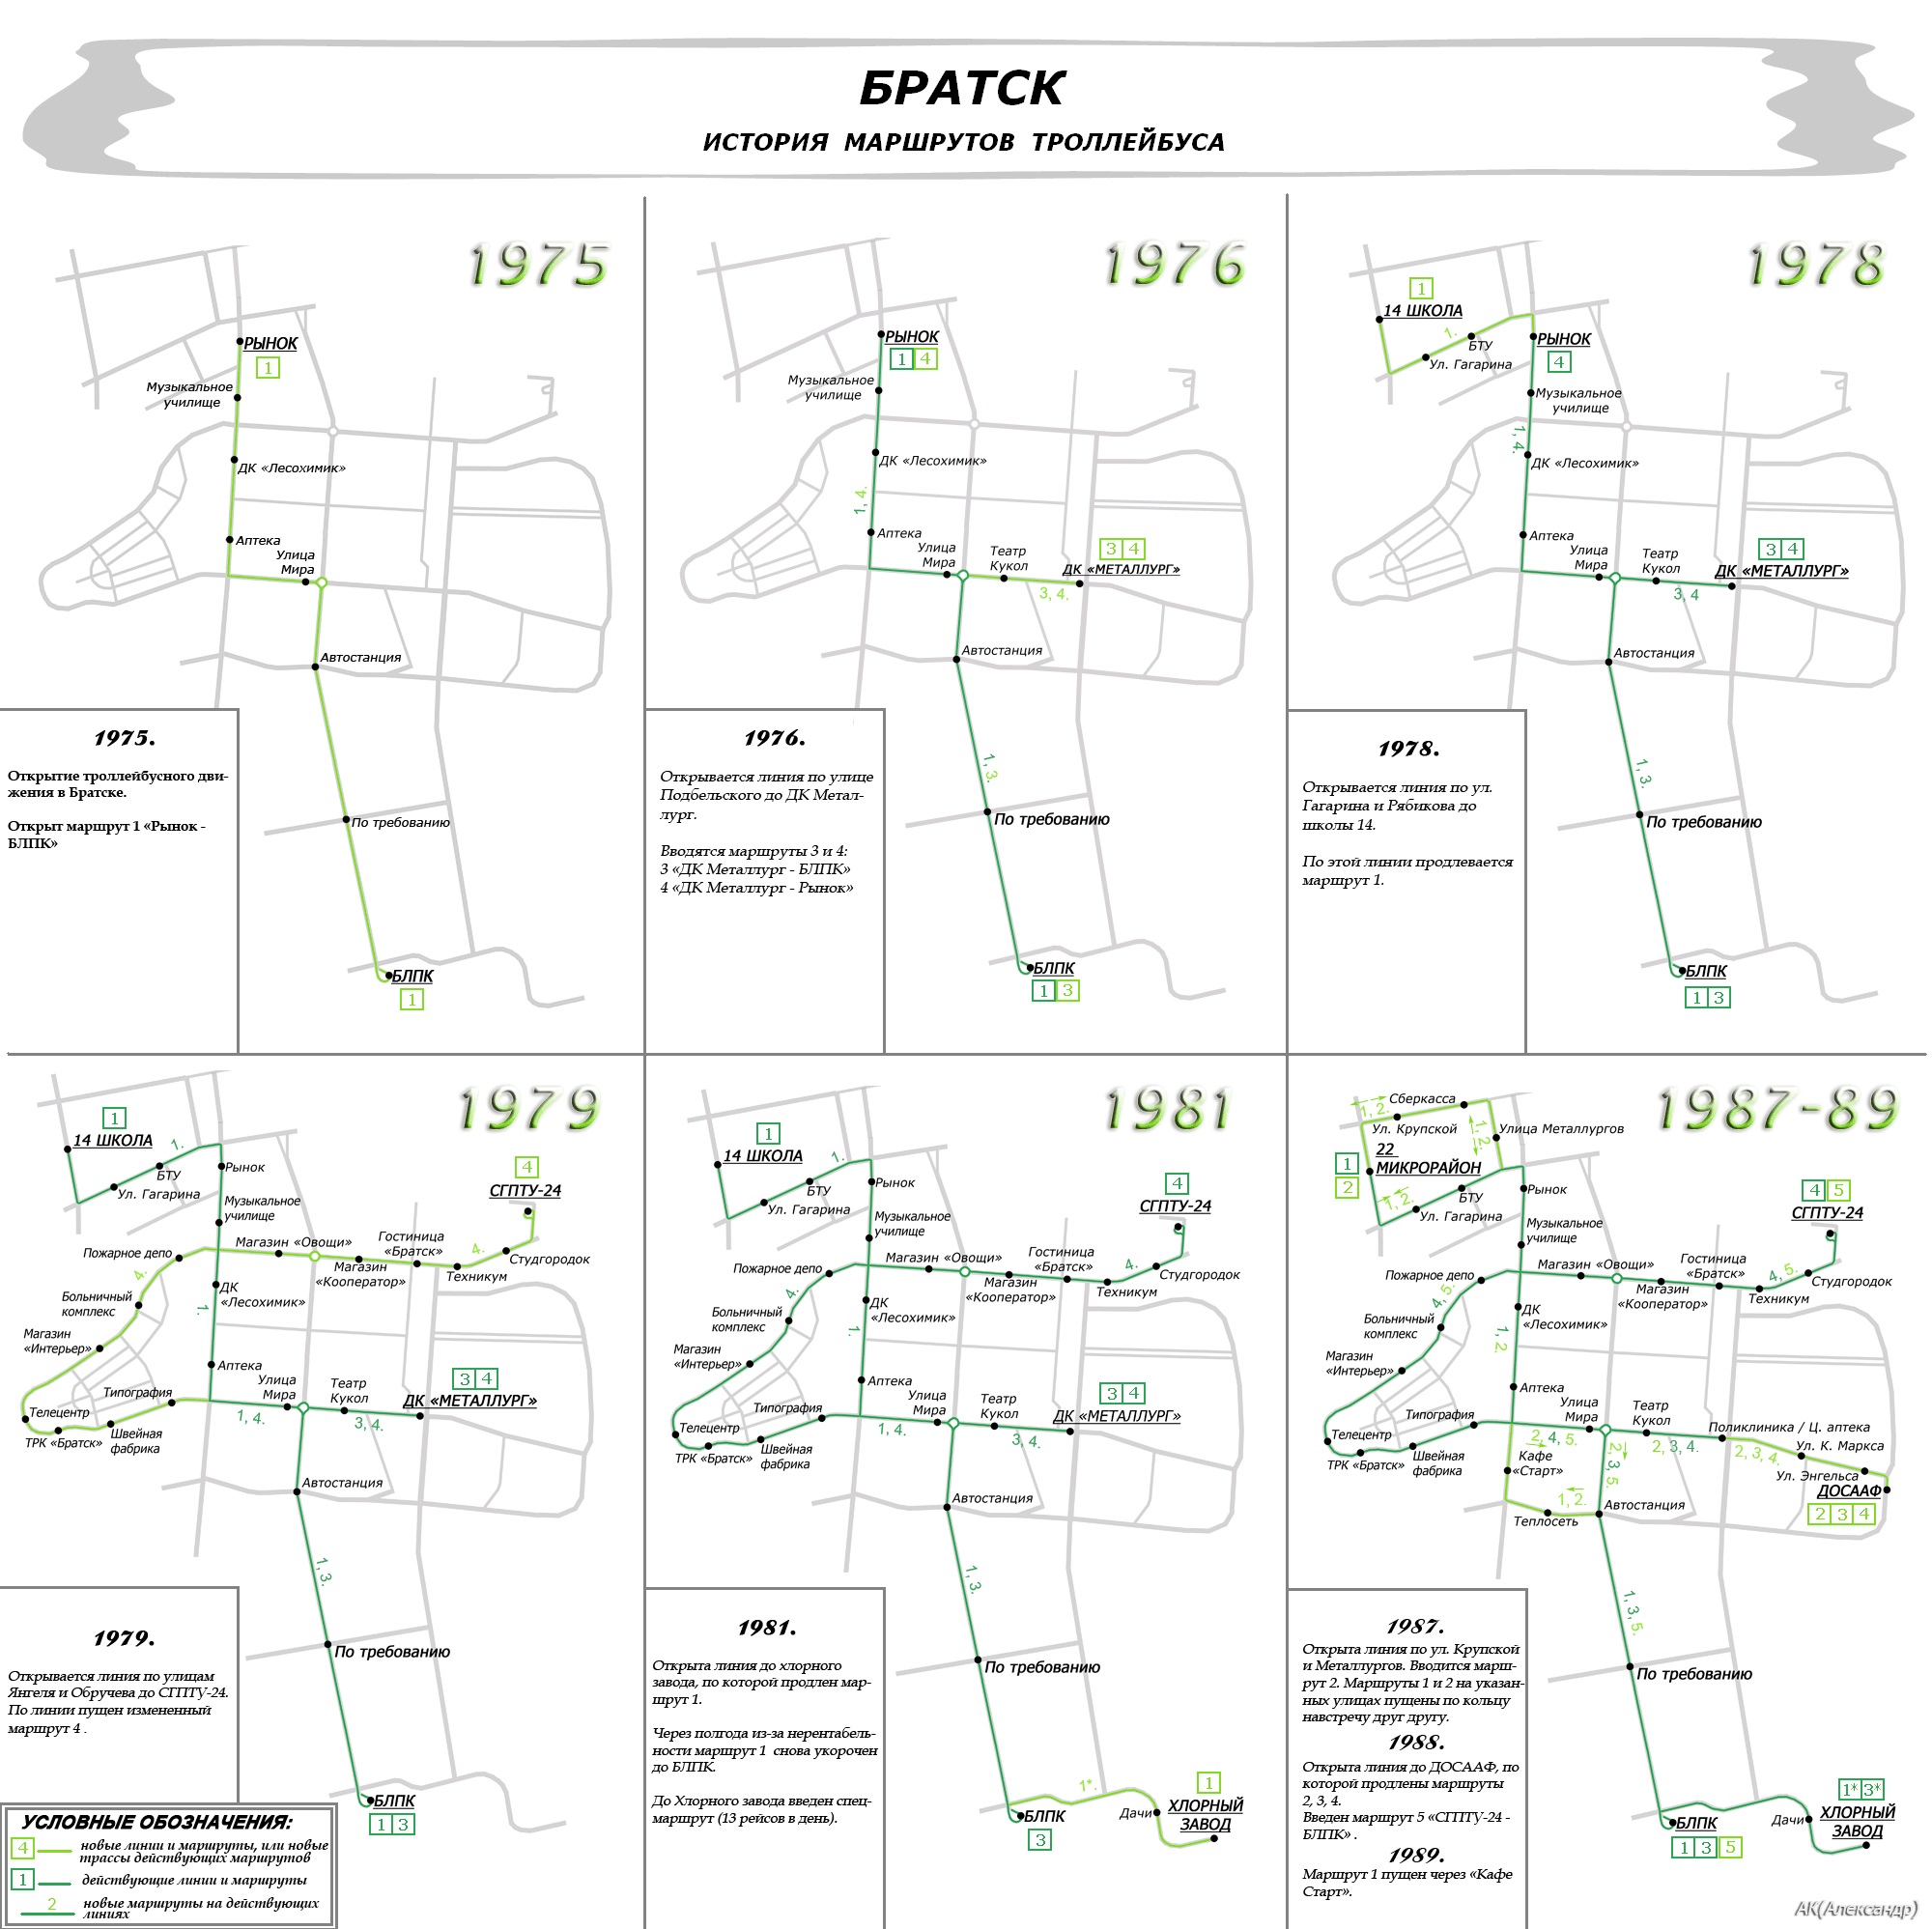 Bratsk — Maps